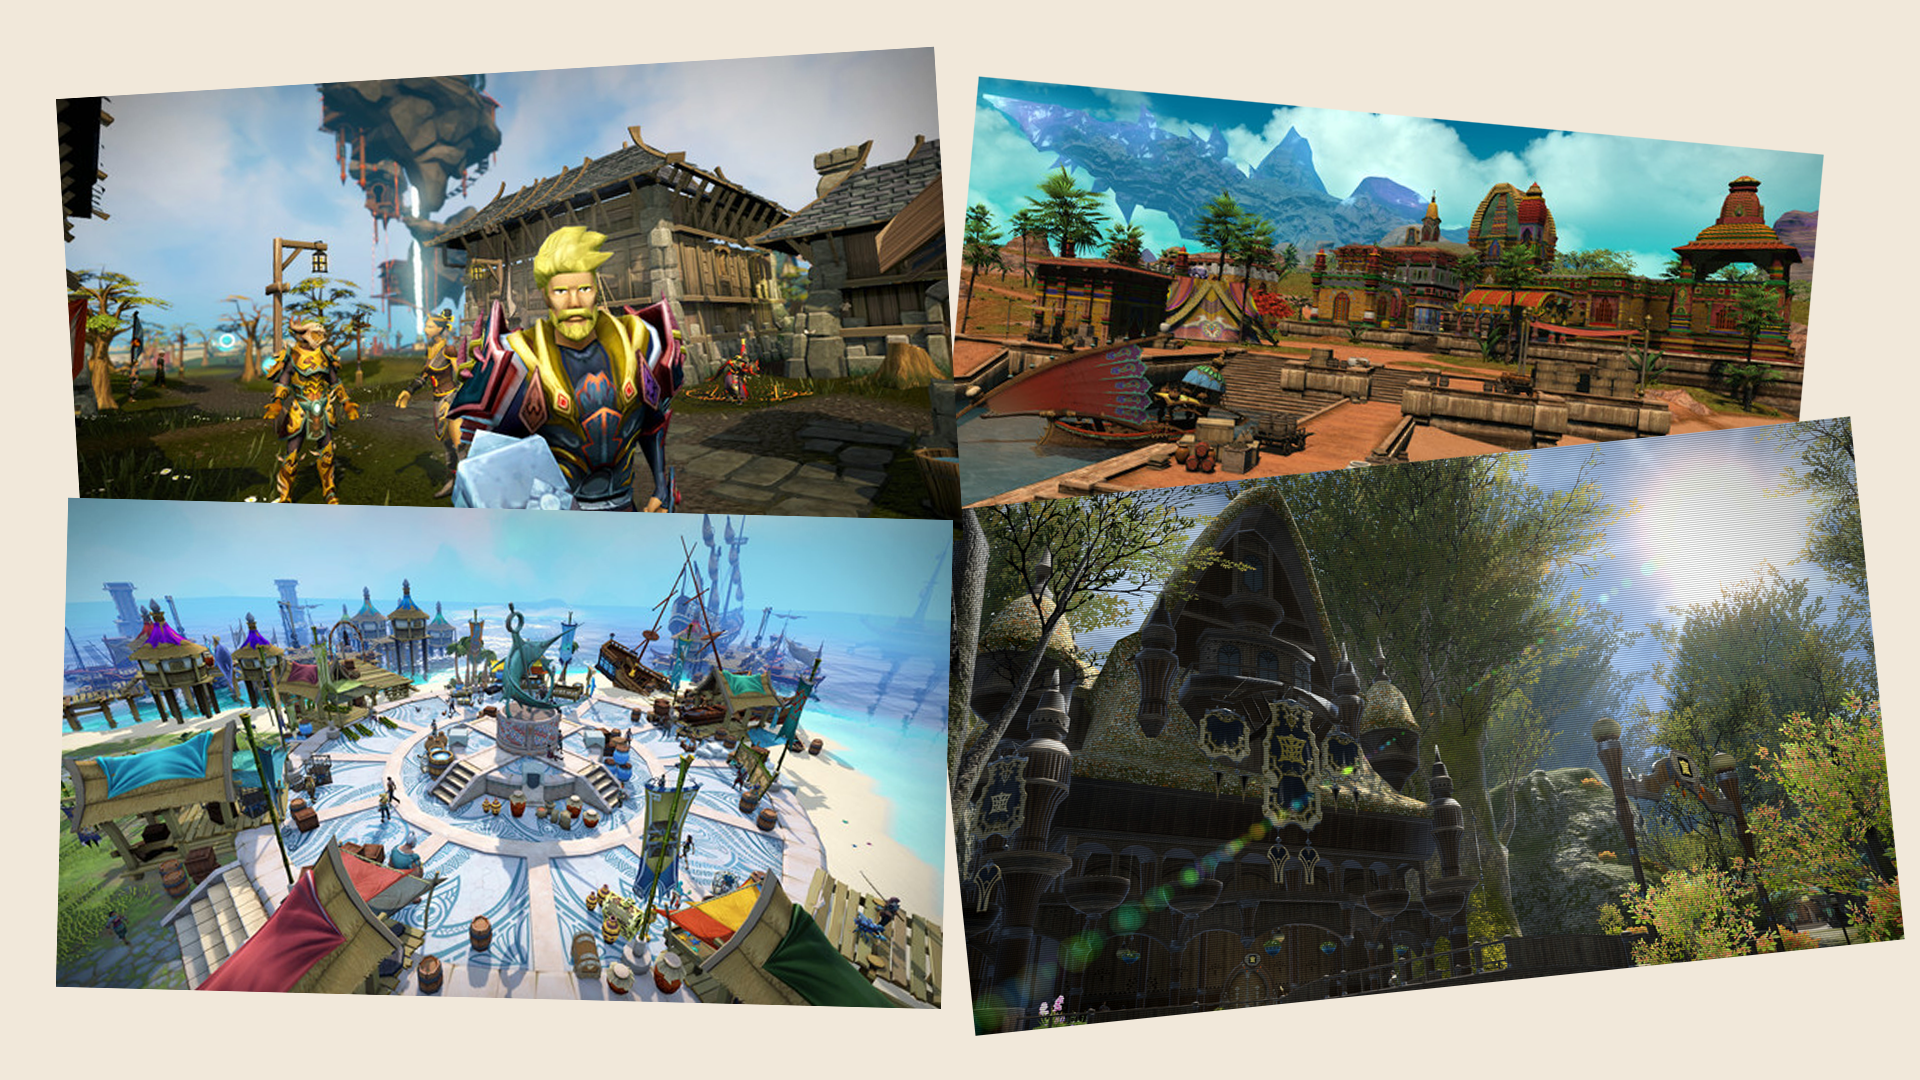 Screenshots of RuneScape and Final Fantasy XIV environments.